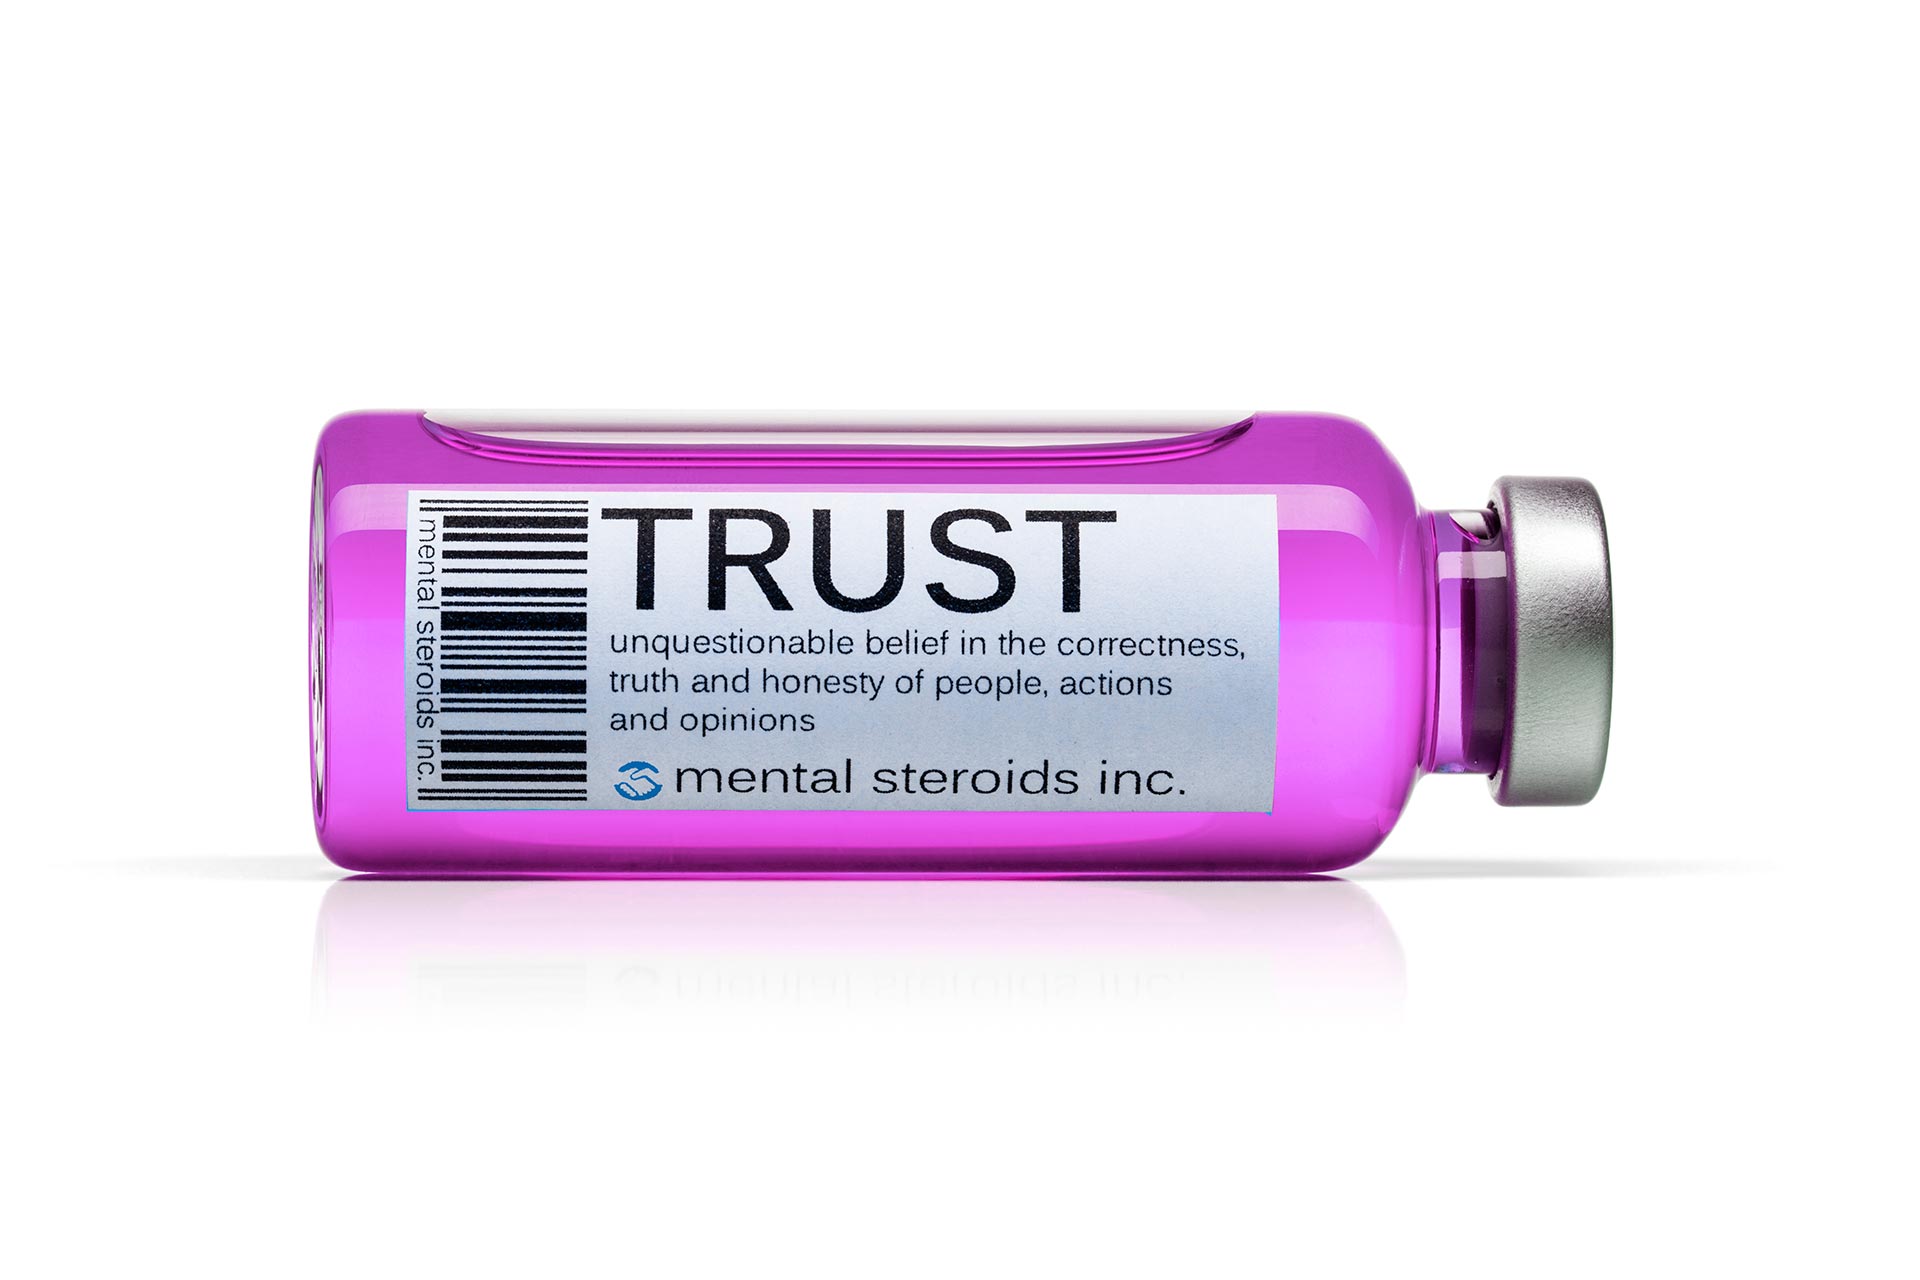 Trust label on a medicine bottle